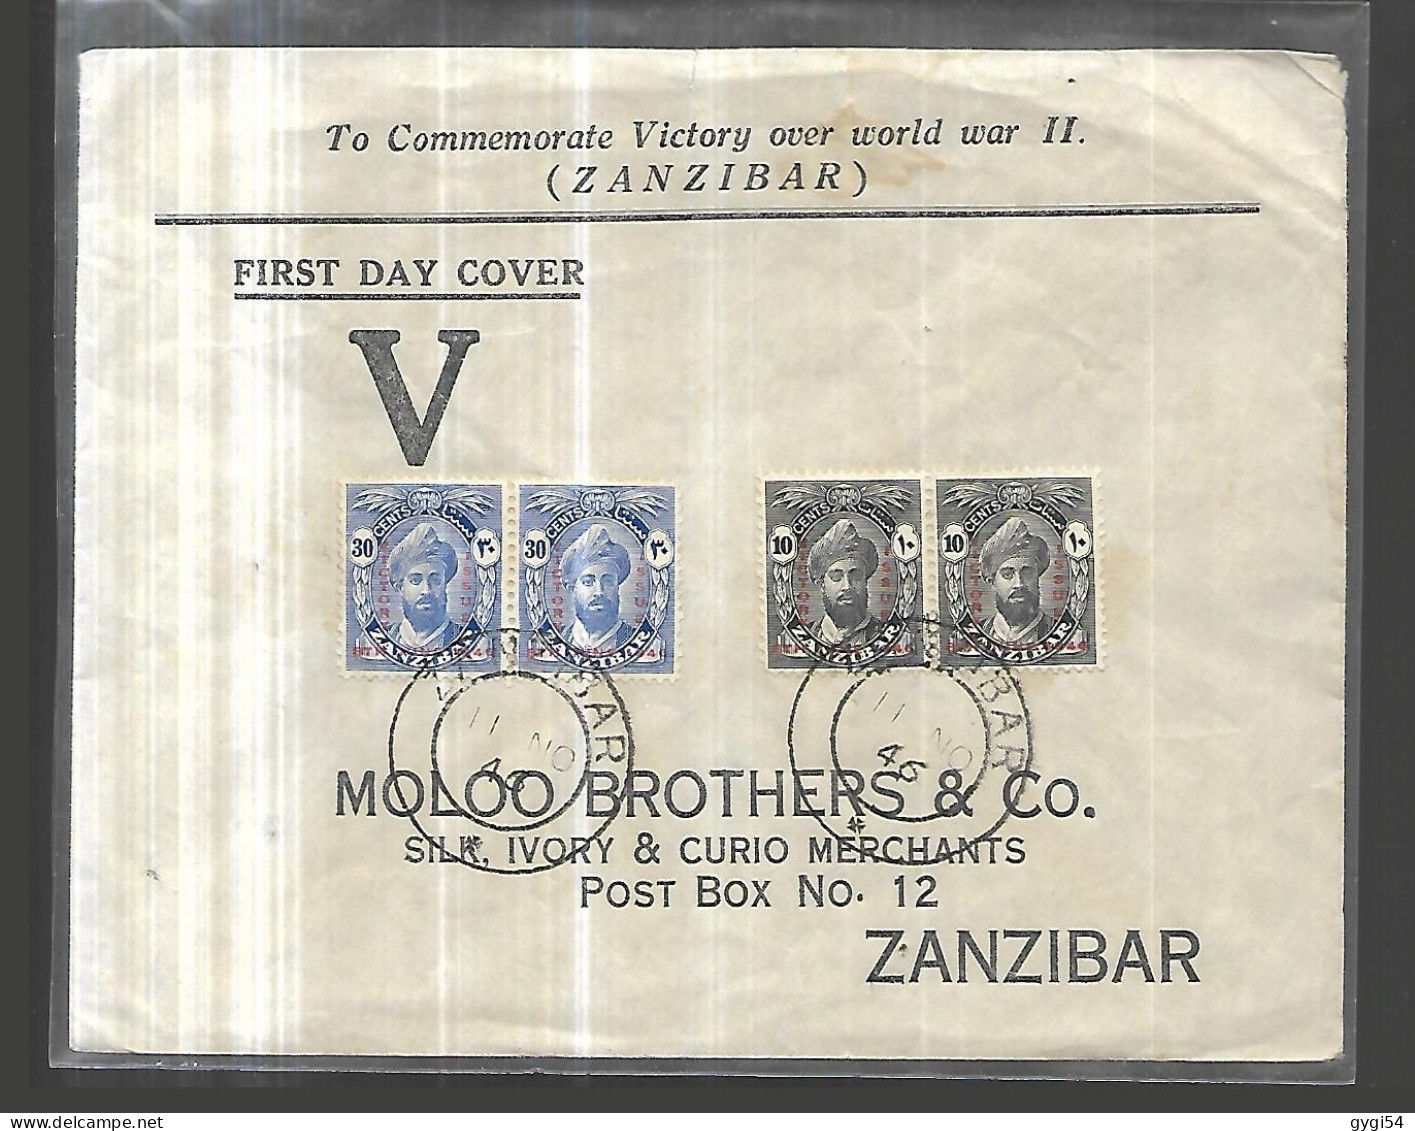 ZANZIBAR FDC LETTRE POUR COMMEMORATIVE DE LA 2ème GUERRE MONDIALE - Zanzibar (...-1963)